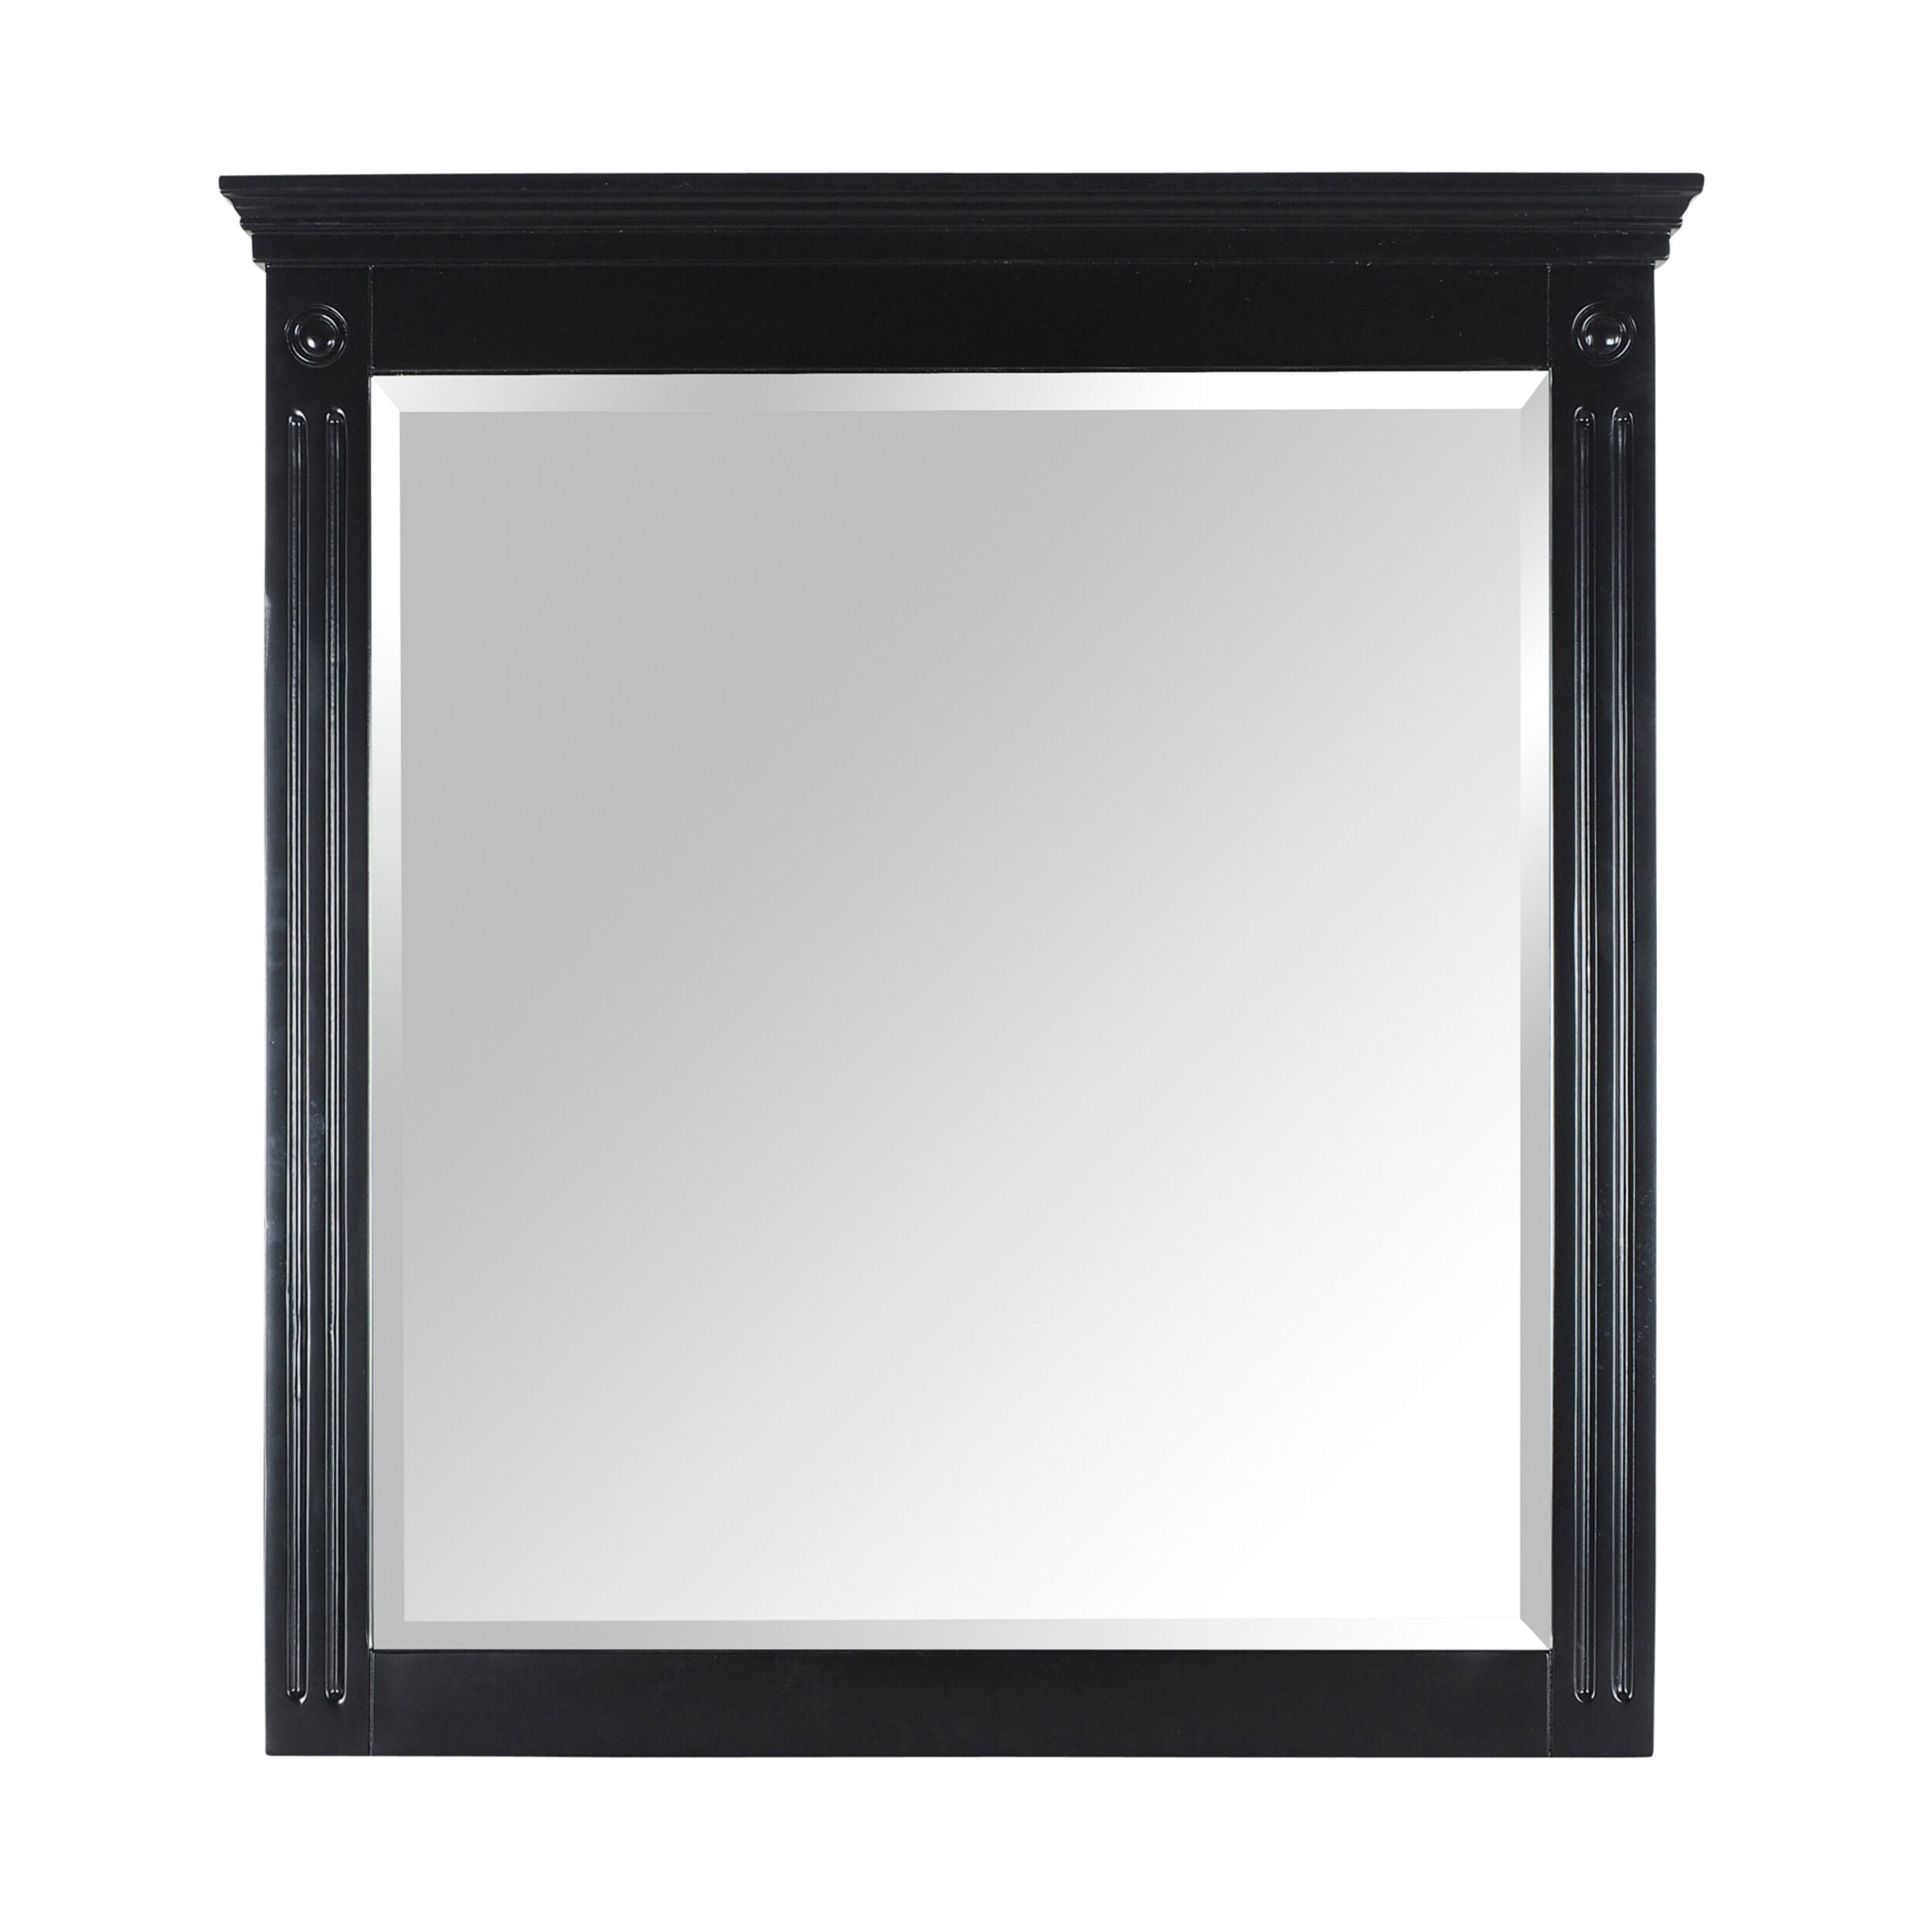 Bella Vanity Mirror Black 76cm